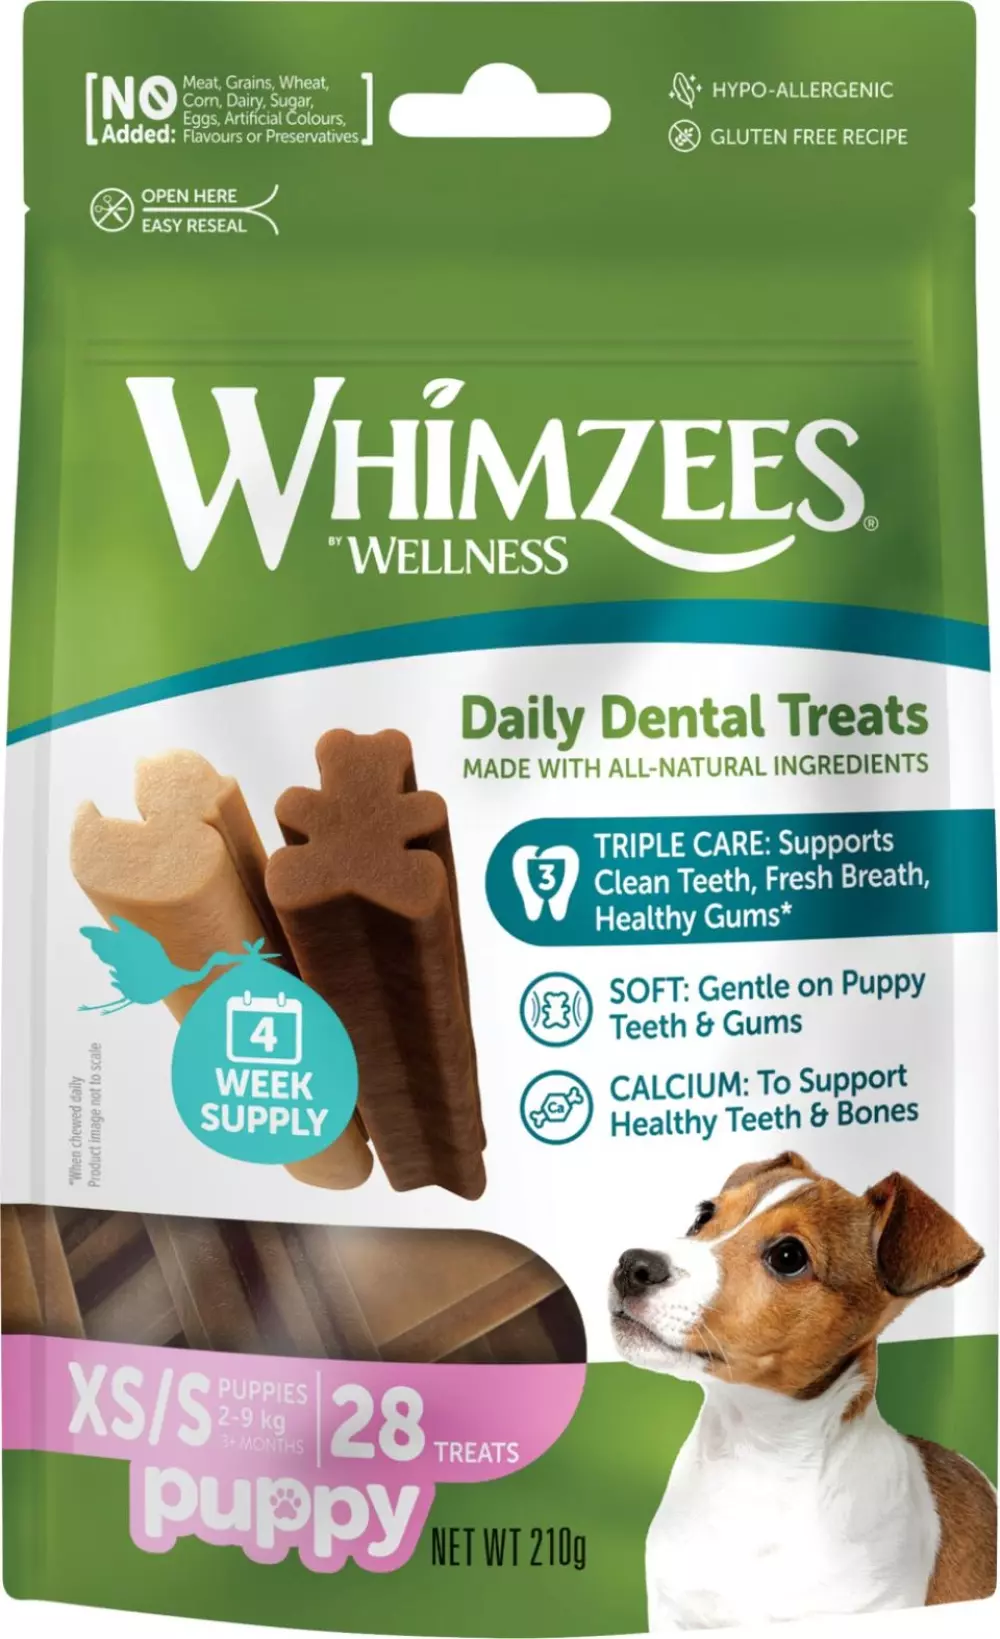 Whimzees Puppy Value Bag XS/S Pose, 8718627754696, Hundeutstyr, Hundegodbiter og Tygg, Whimzees, Eldorado, Whimzees Puppy XS/S, 14 stk, 105 g